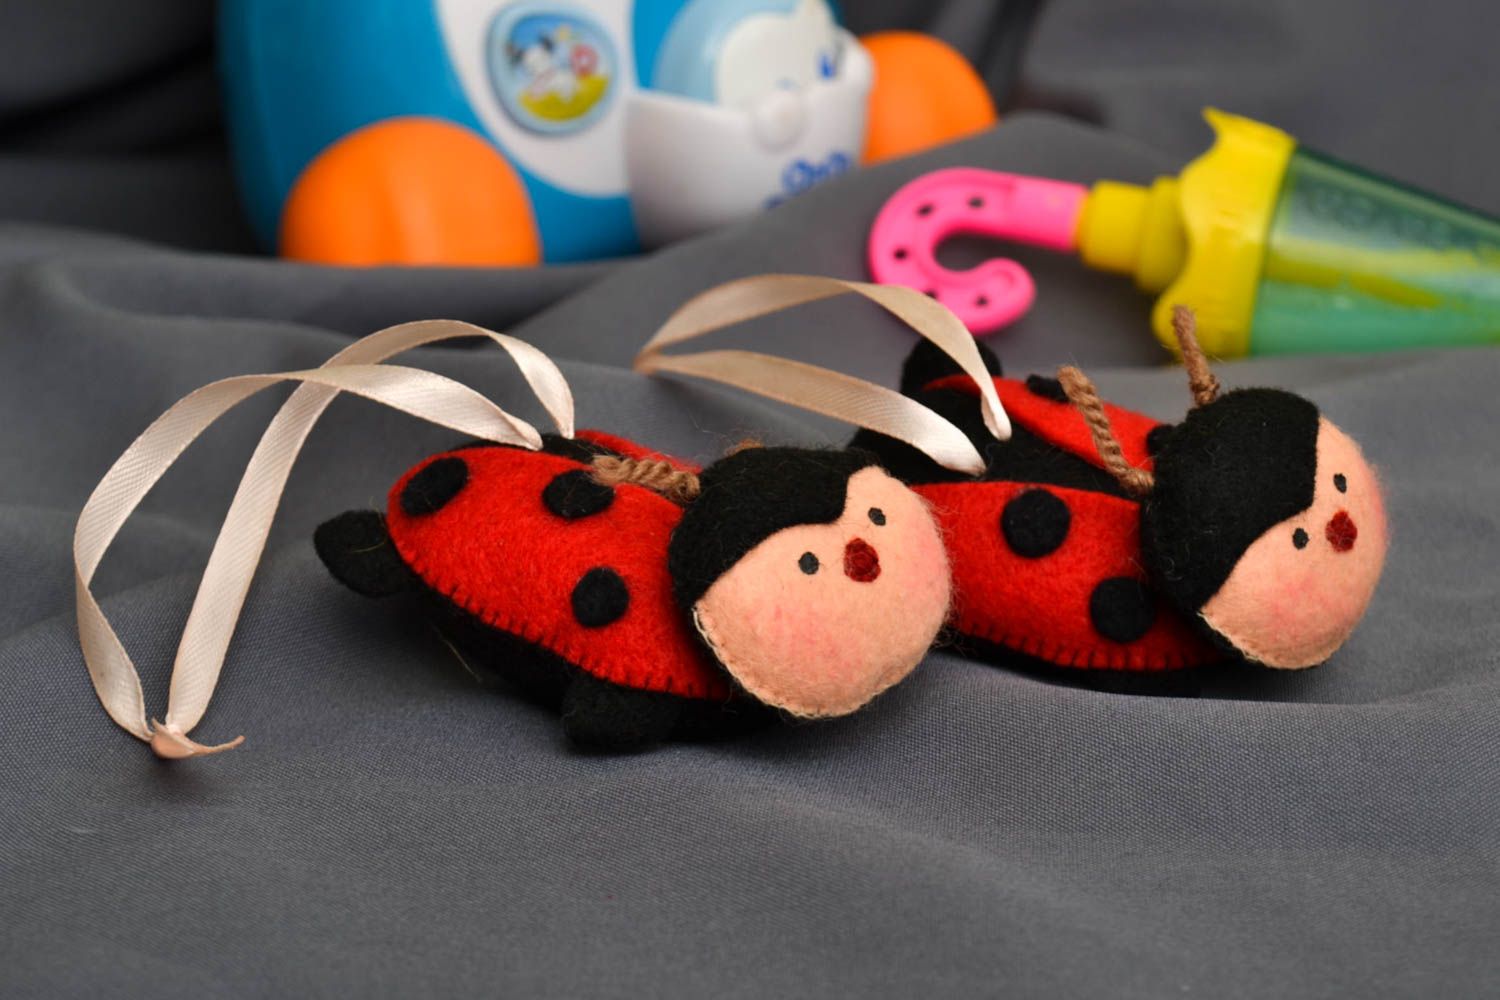 Handmade toy unusual toy designer soft toy for kids nursery decor set of 2 items photo 1